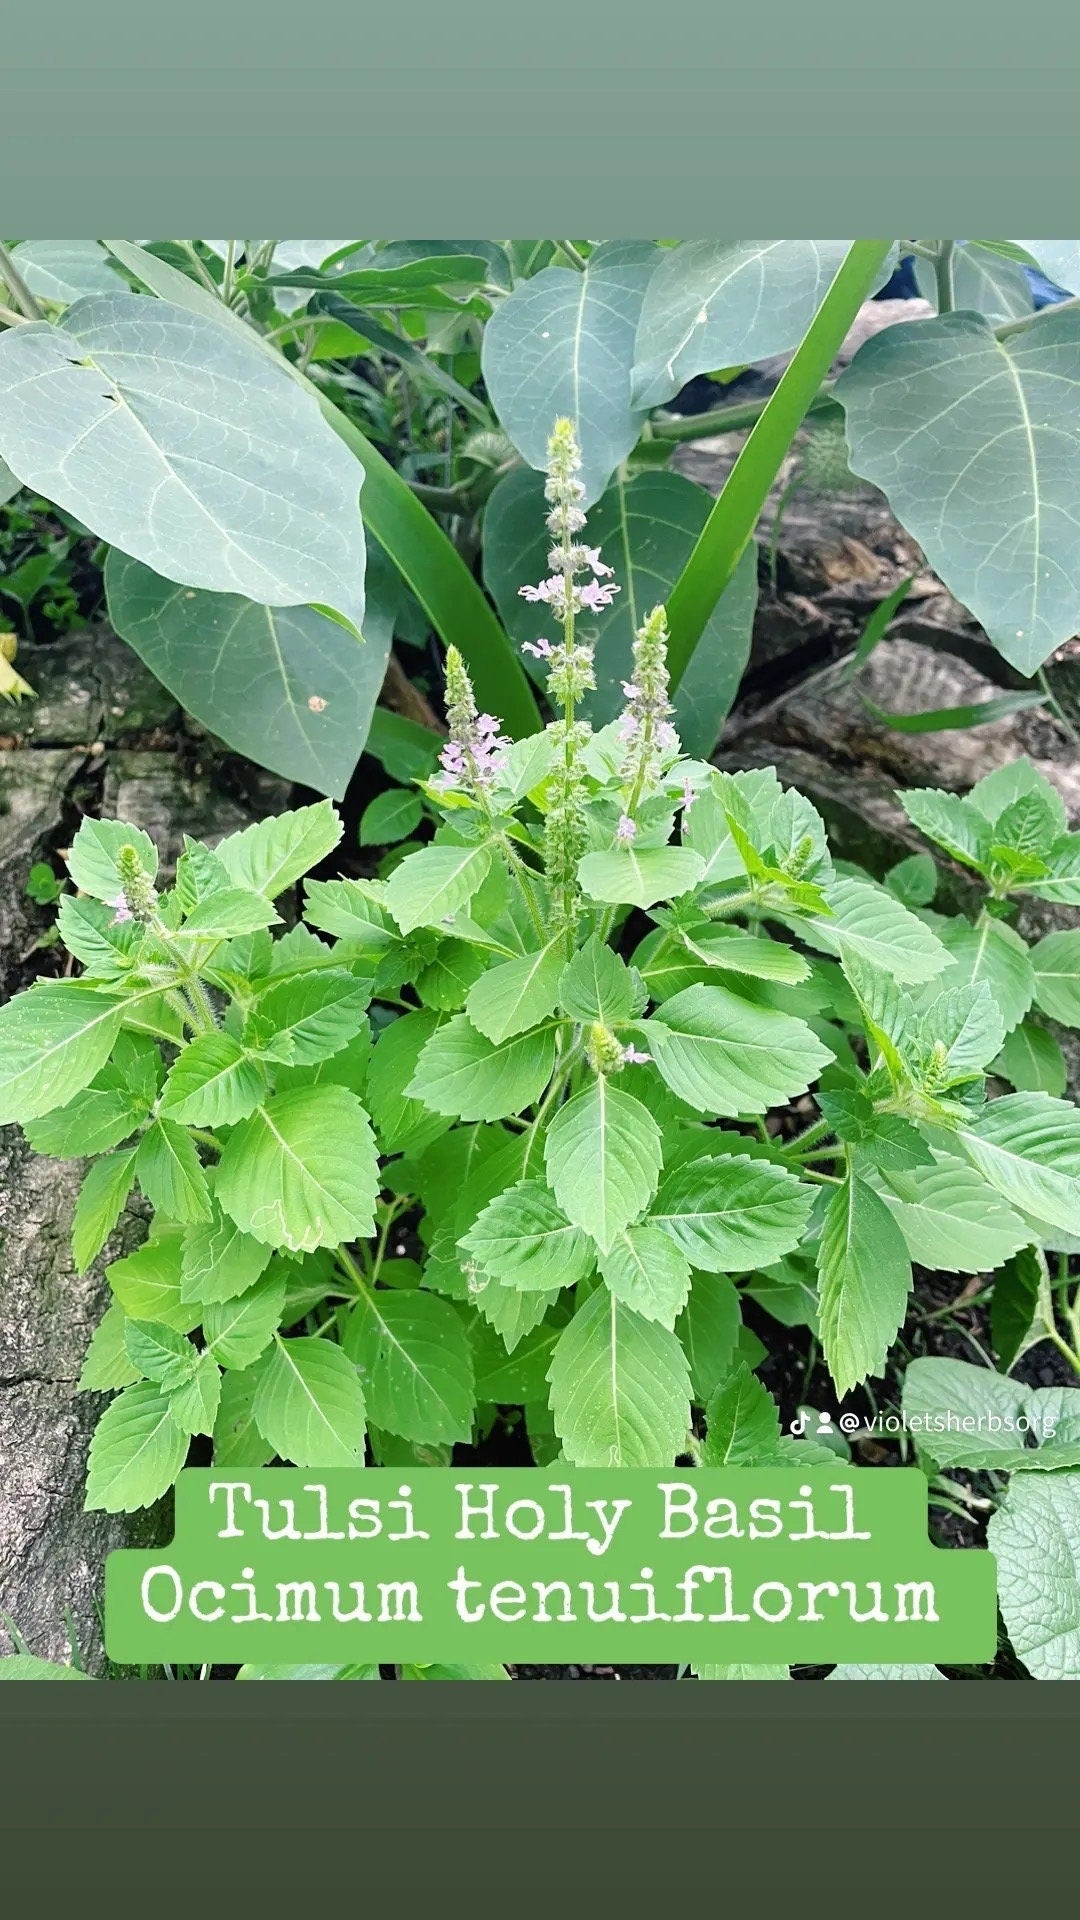 Holy Basil Tulsi | Hand-Picked Dry Leaves and Flowers |Ocimum tenuiflorum | Home Grown